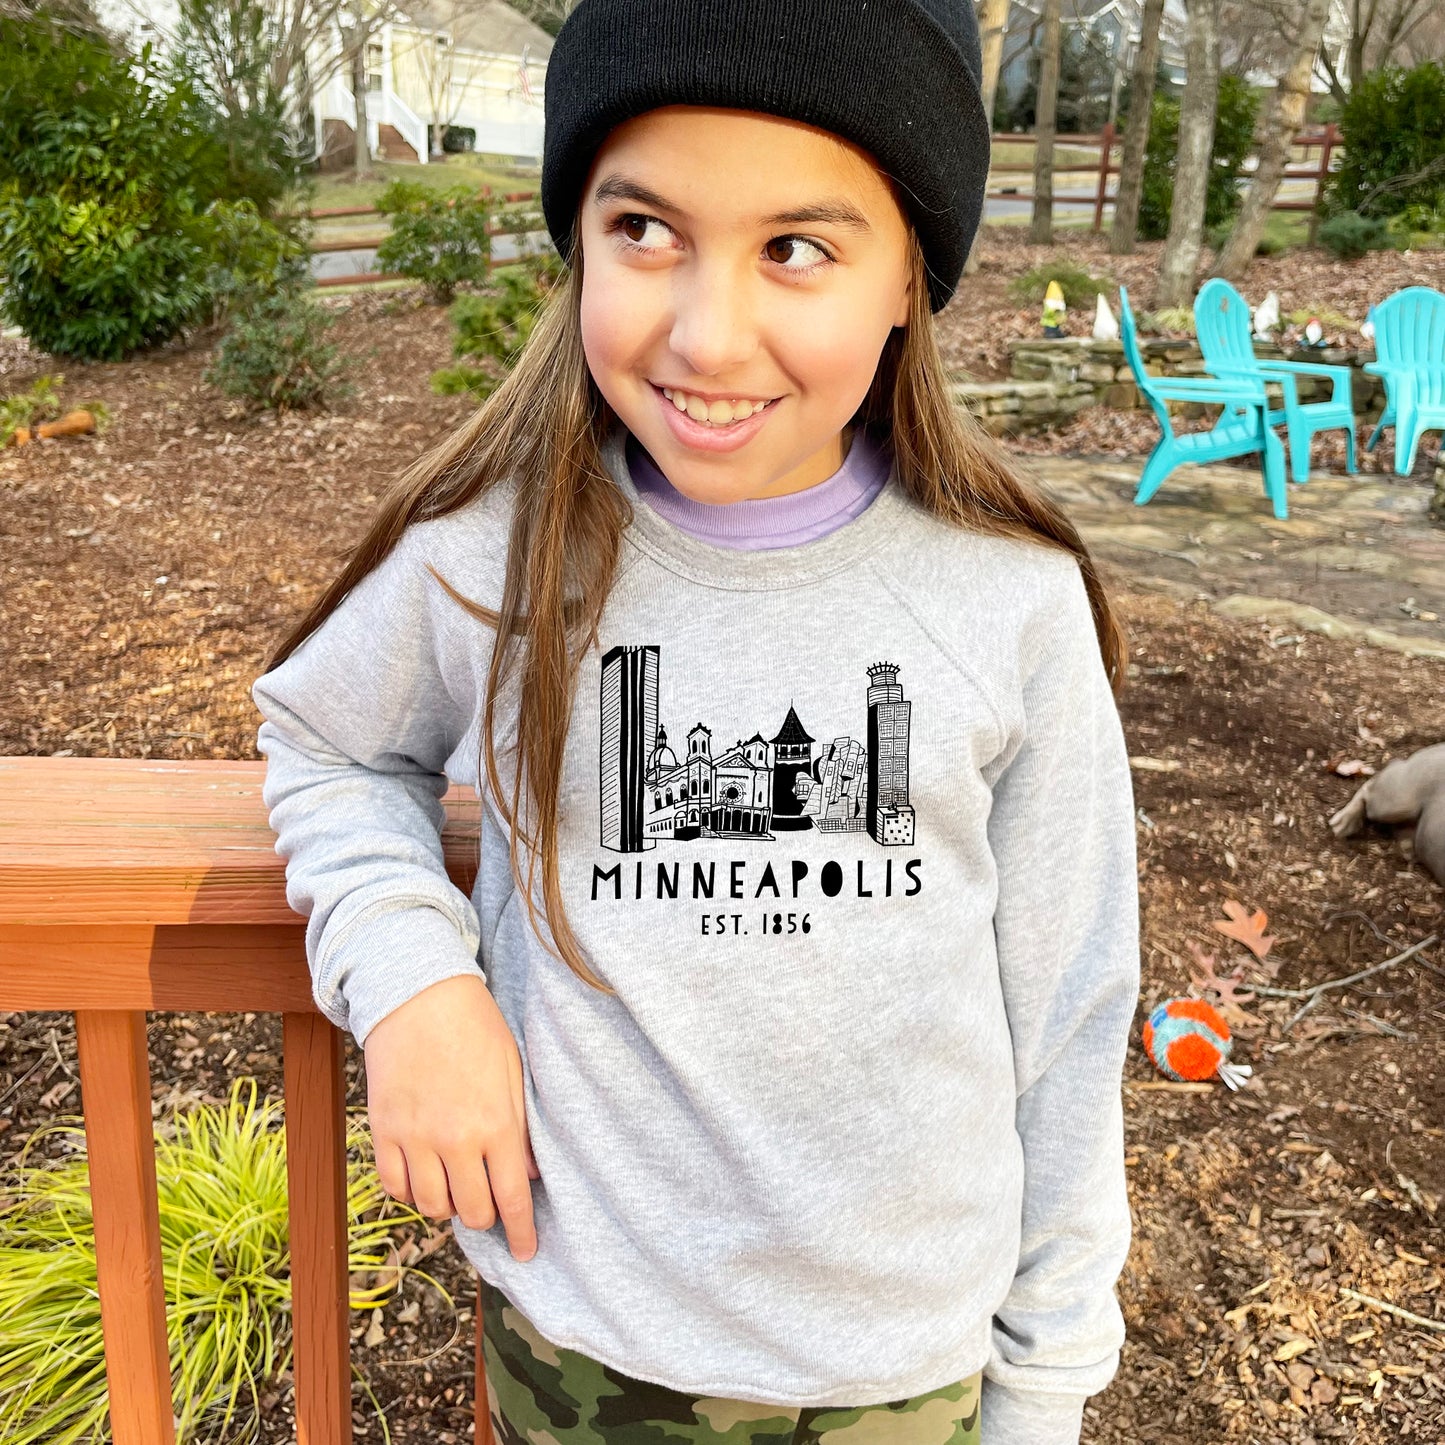 Minneapolis (MN) - Kid's Sweatshirt - Heather Gray or Mauve